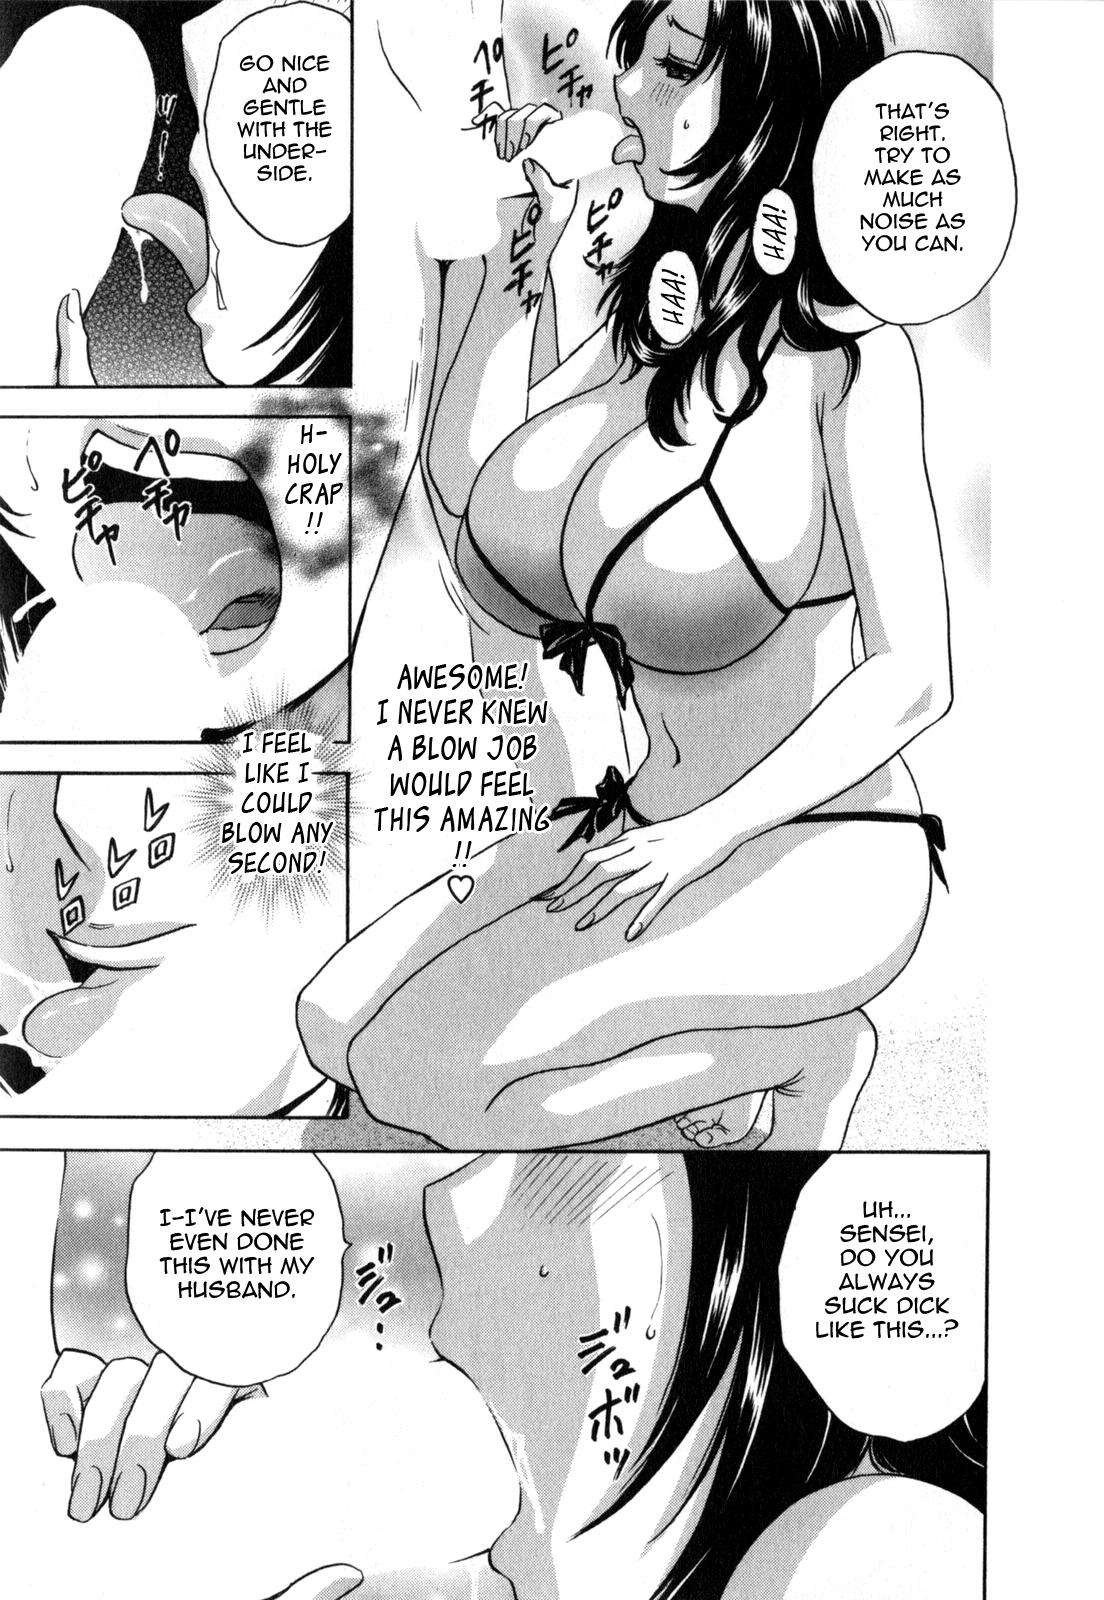 [Hidemaru] Life with Married Women Just Like a Manga 1 - Ch. 1-5 [English] {Tadanohito} 17